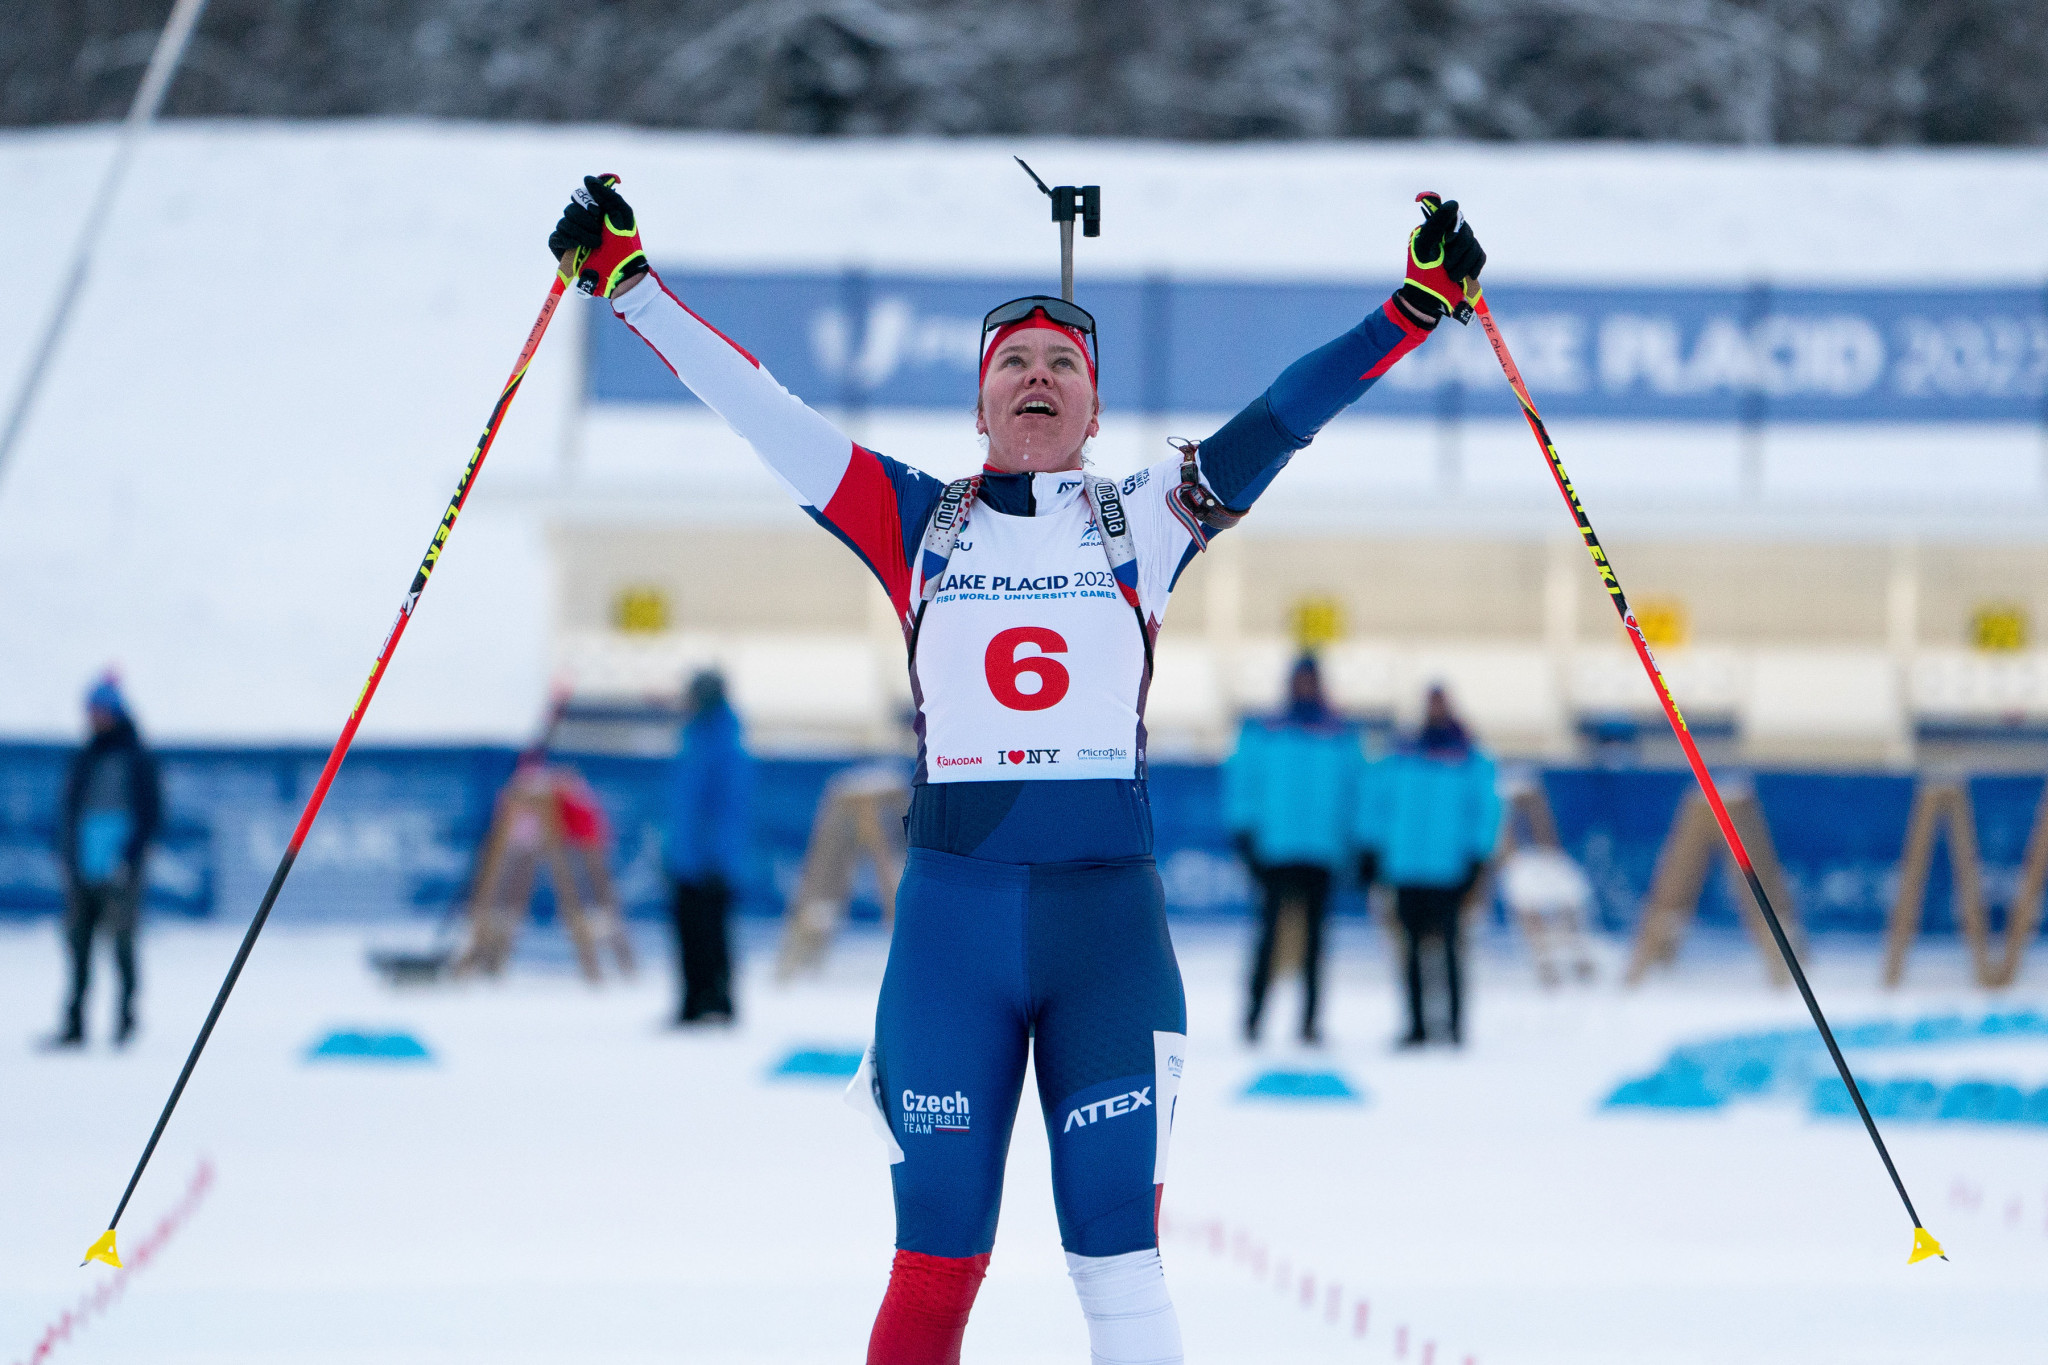 The Czech Republic's Kristyna Otcovska won the women's 12.5km biathlon mass start by 21.1 seconds at Mount Van Hoevenberg ©FISU